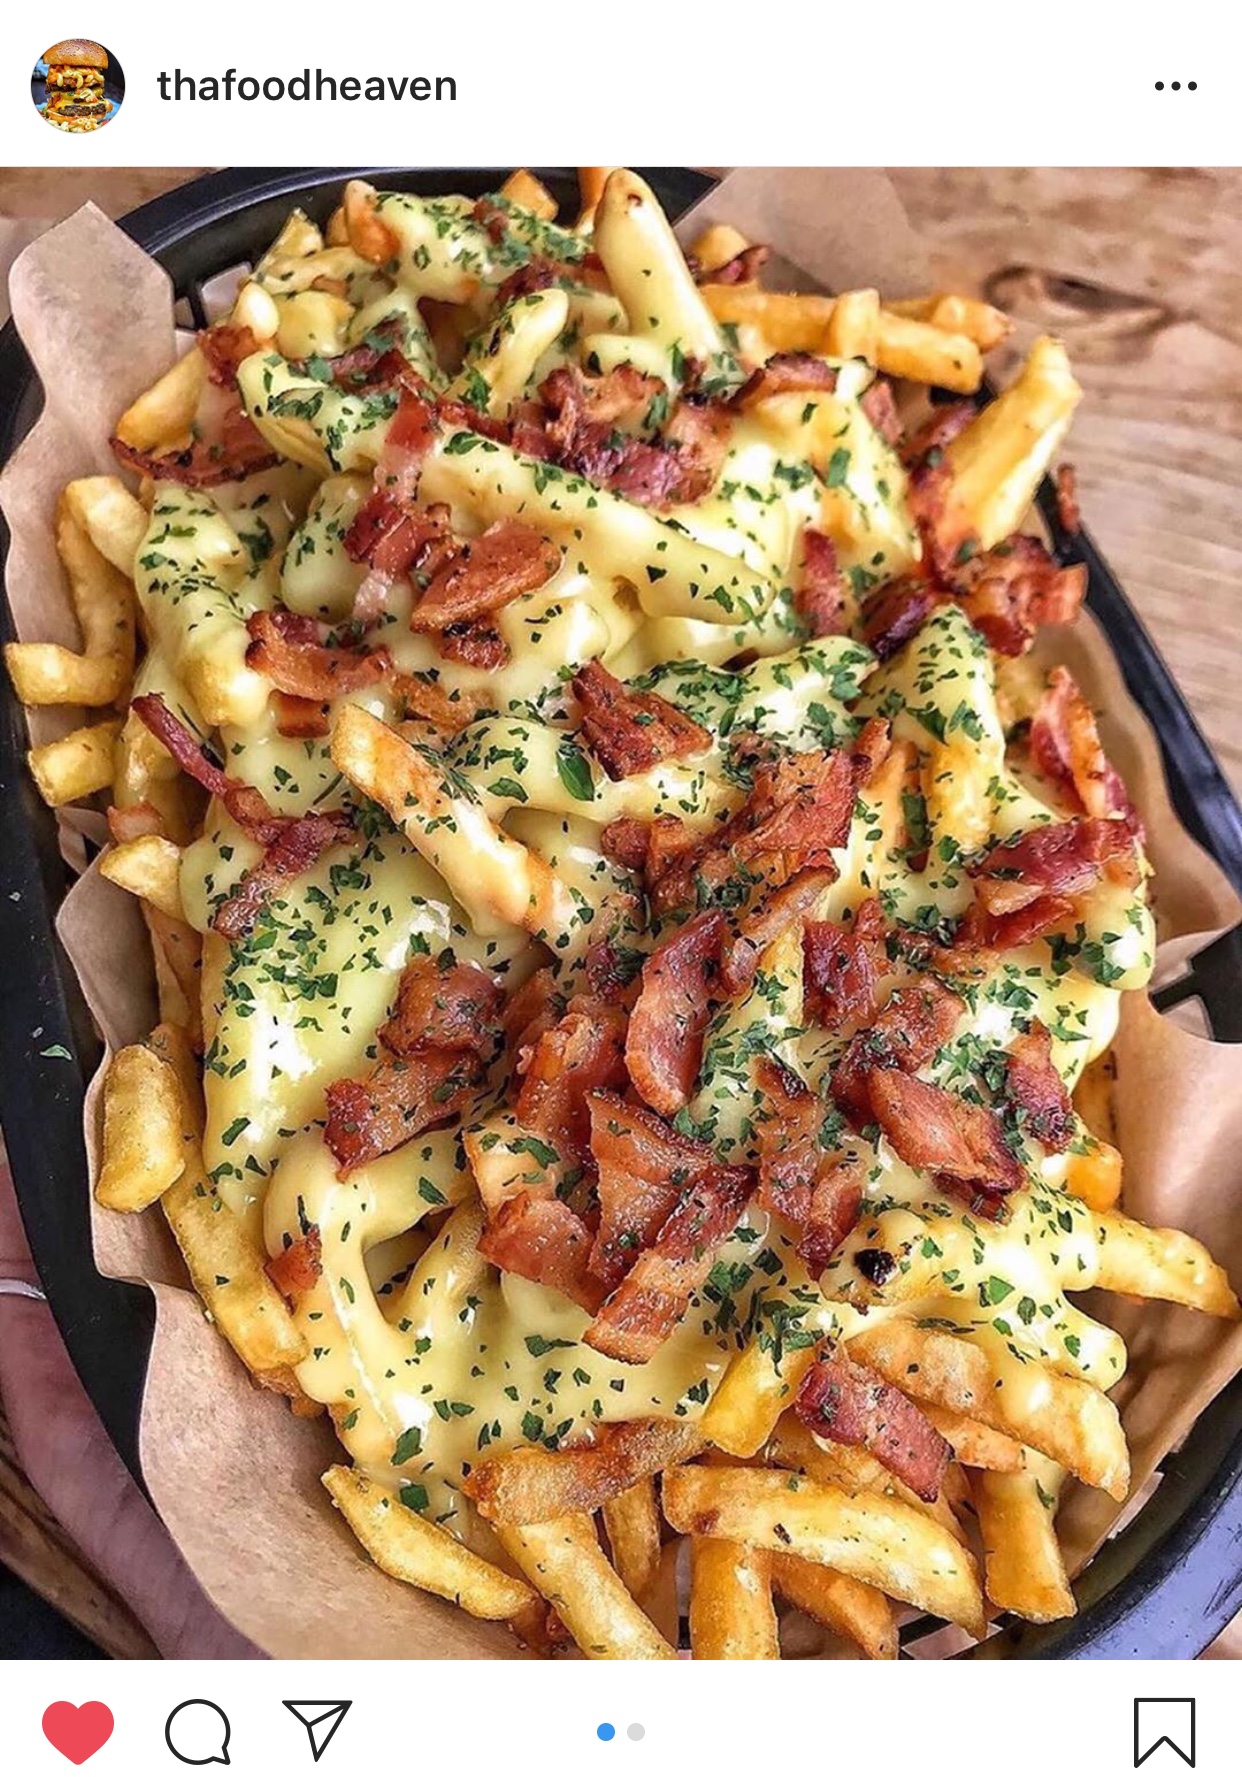 fries foodporn - Ada thafoodheaven